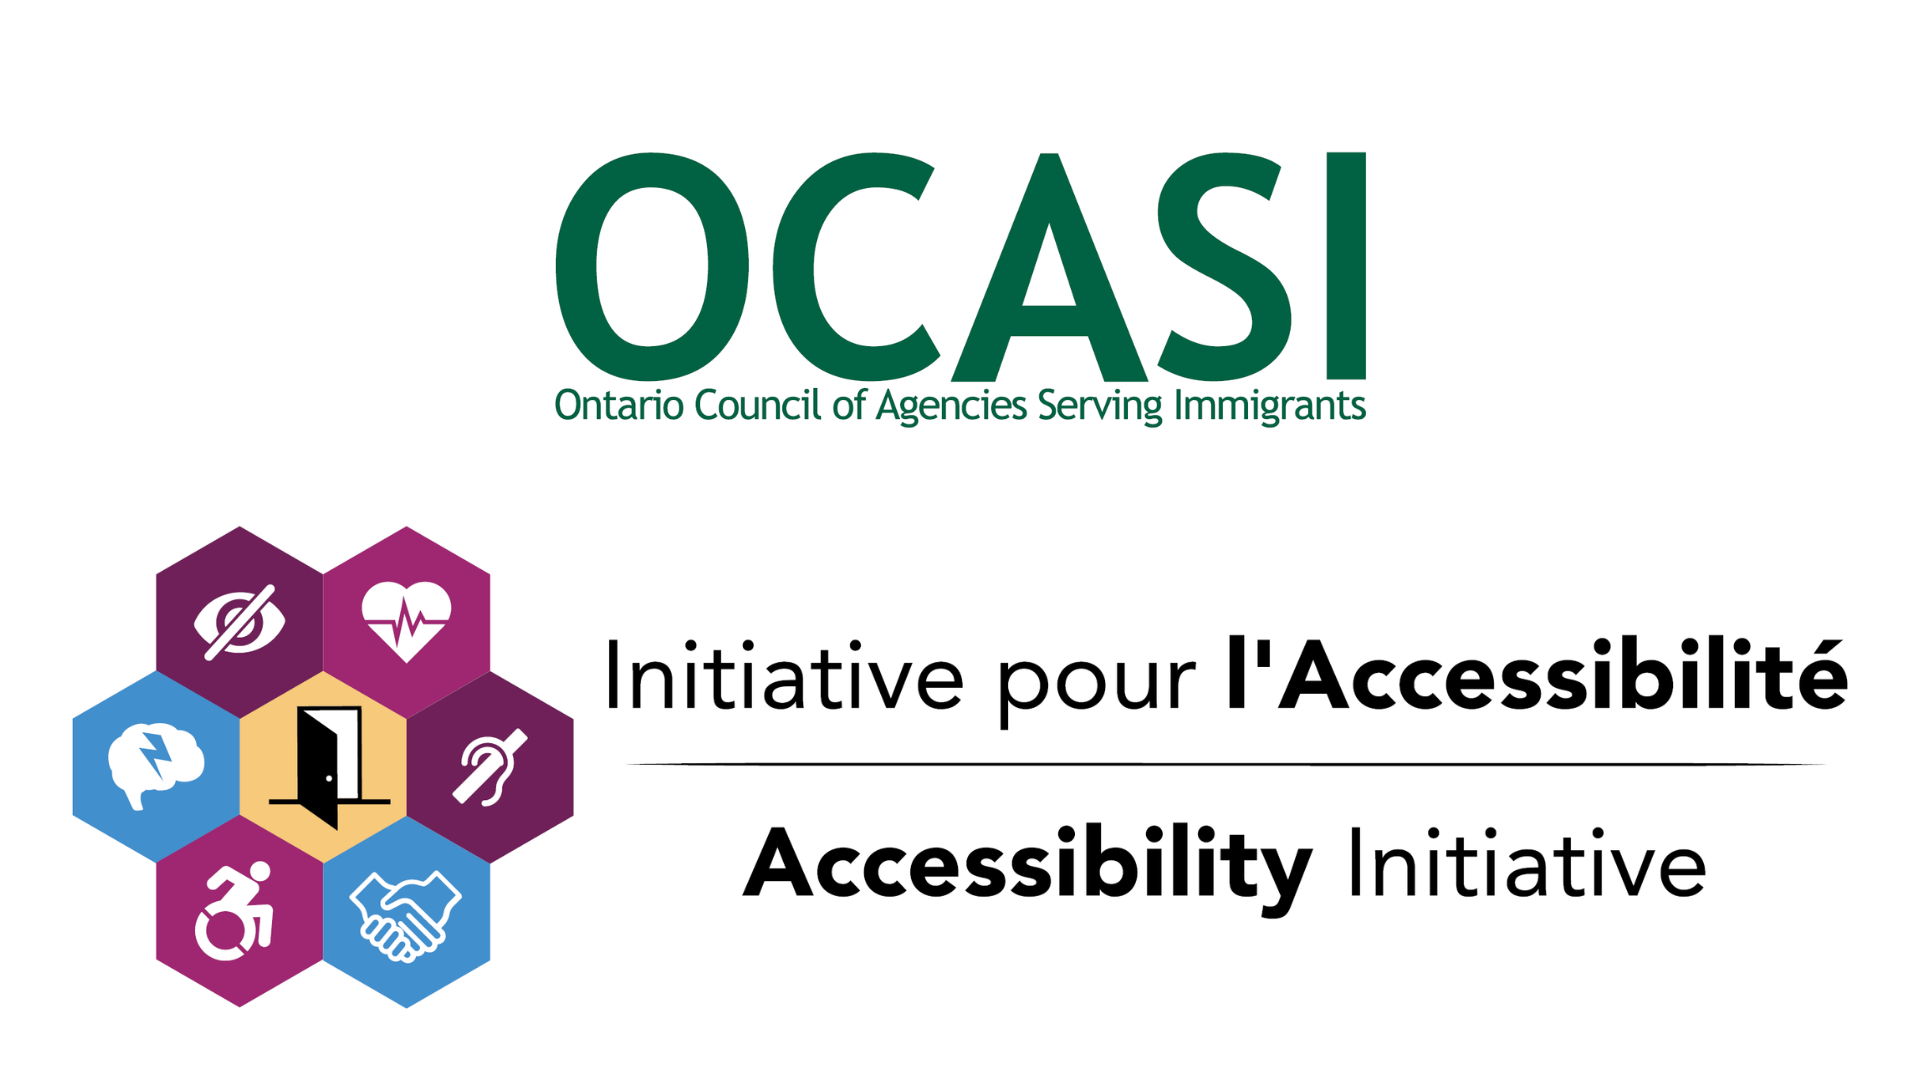 OCASI logo, Ontario Council of Agencies Serving Immigrants. OCASI logo for their Accessibility Initiative/Initiative pour l’Accessibilité.